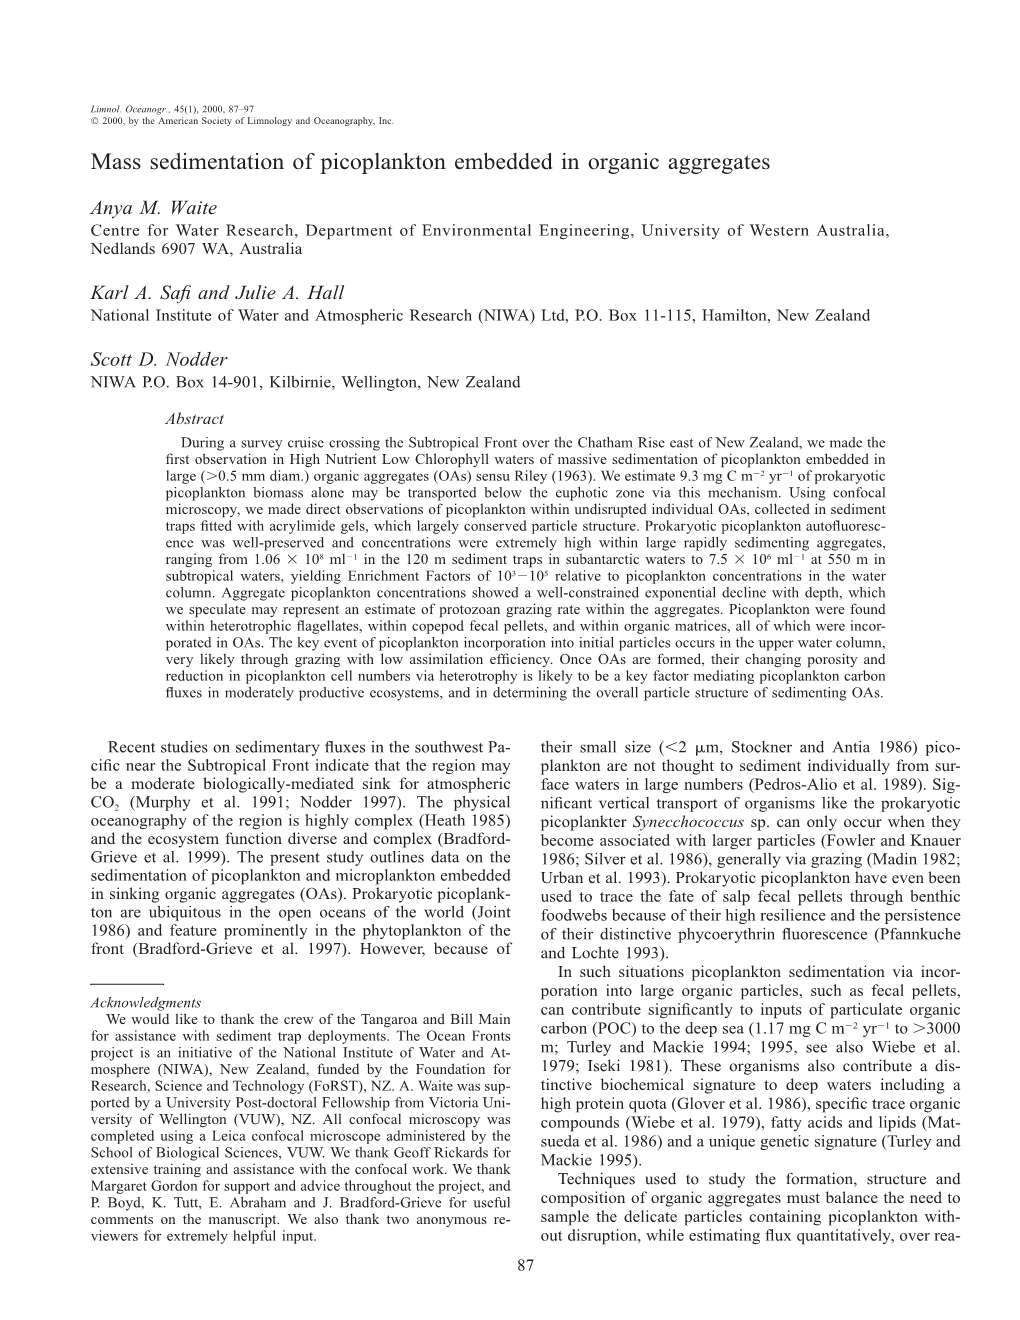 Mass Sedimentation of Picoplankton Embedded in Organic Aggregates